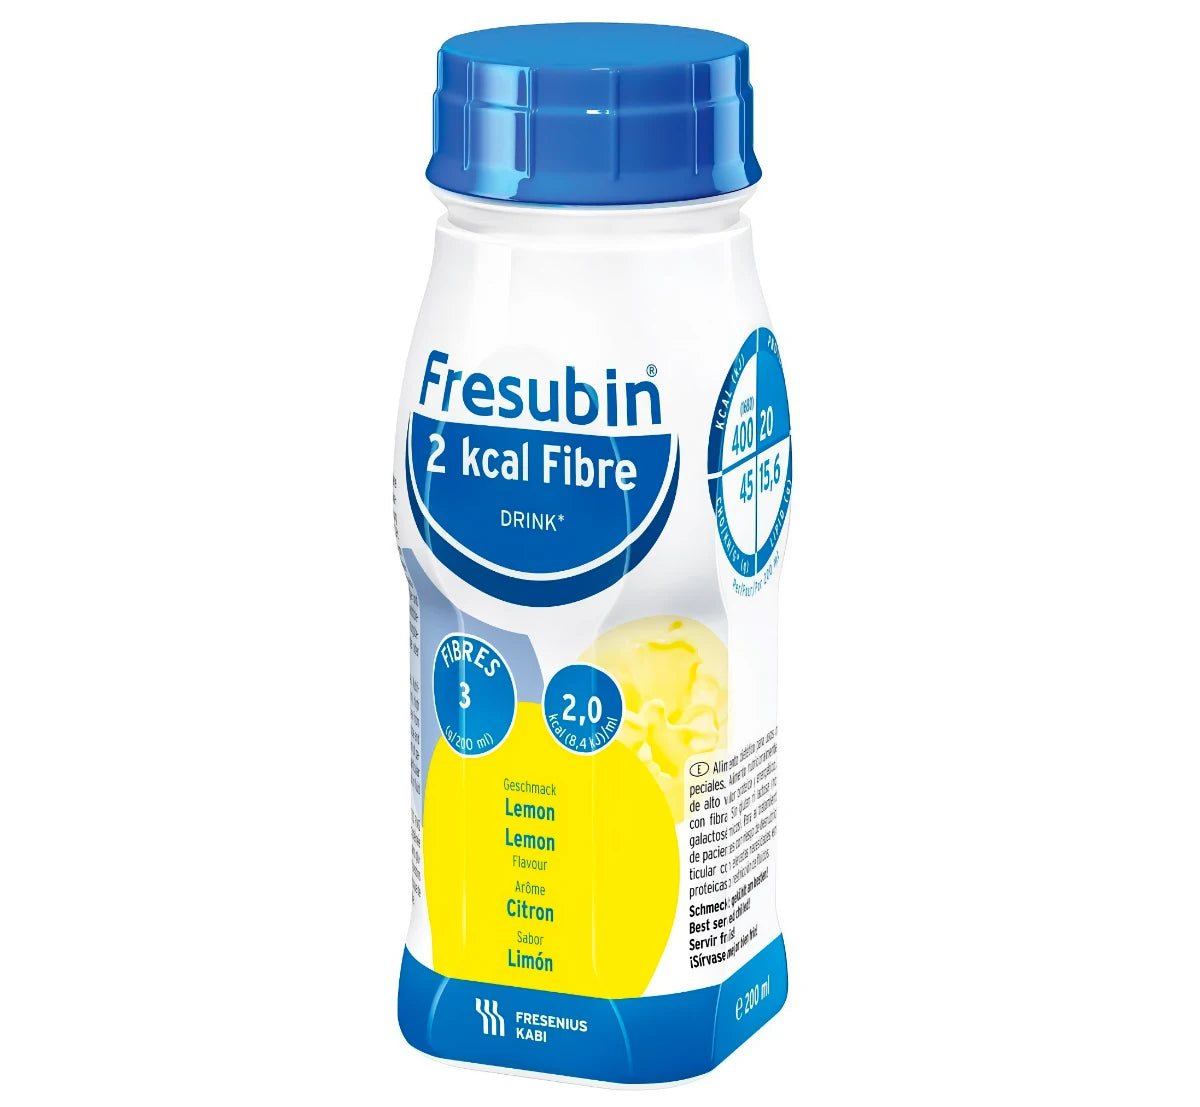 FRESUBIN 2 kcal fibre drink sitruuna kliininen ravintovalmiste 4x200 ml